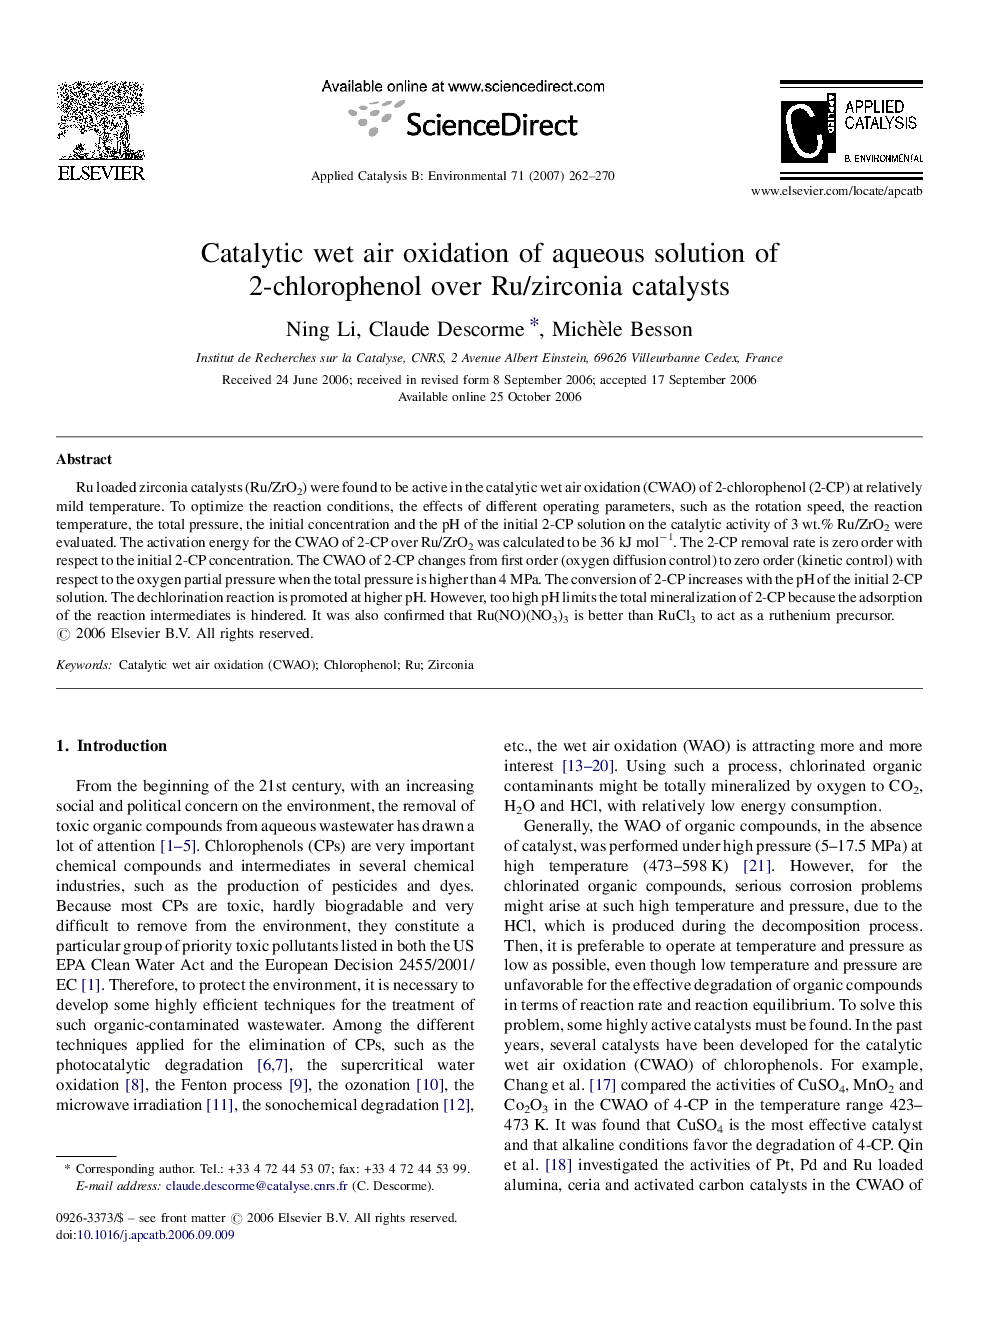 Catalytic wet air oxidation of aqueous solution of 2-chlorophenol over Ru/zirconia catalysts